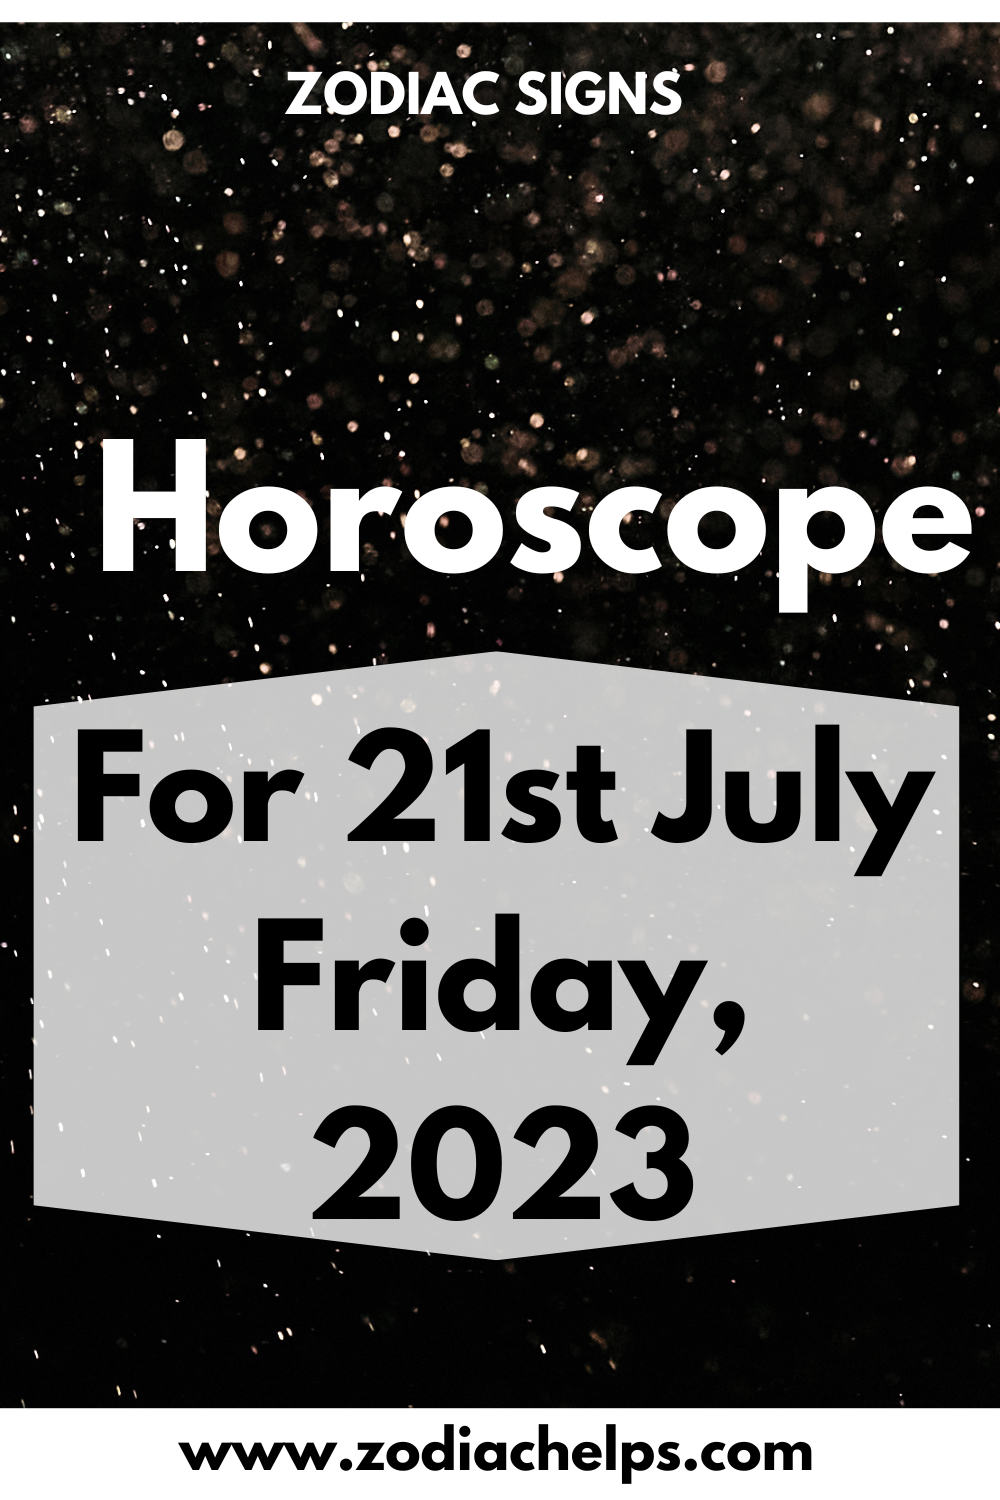 Horoscope for 21st July Friday, 2023